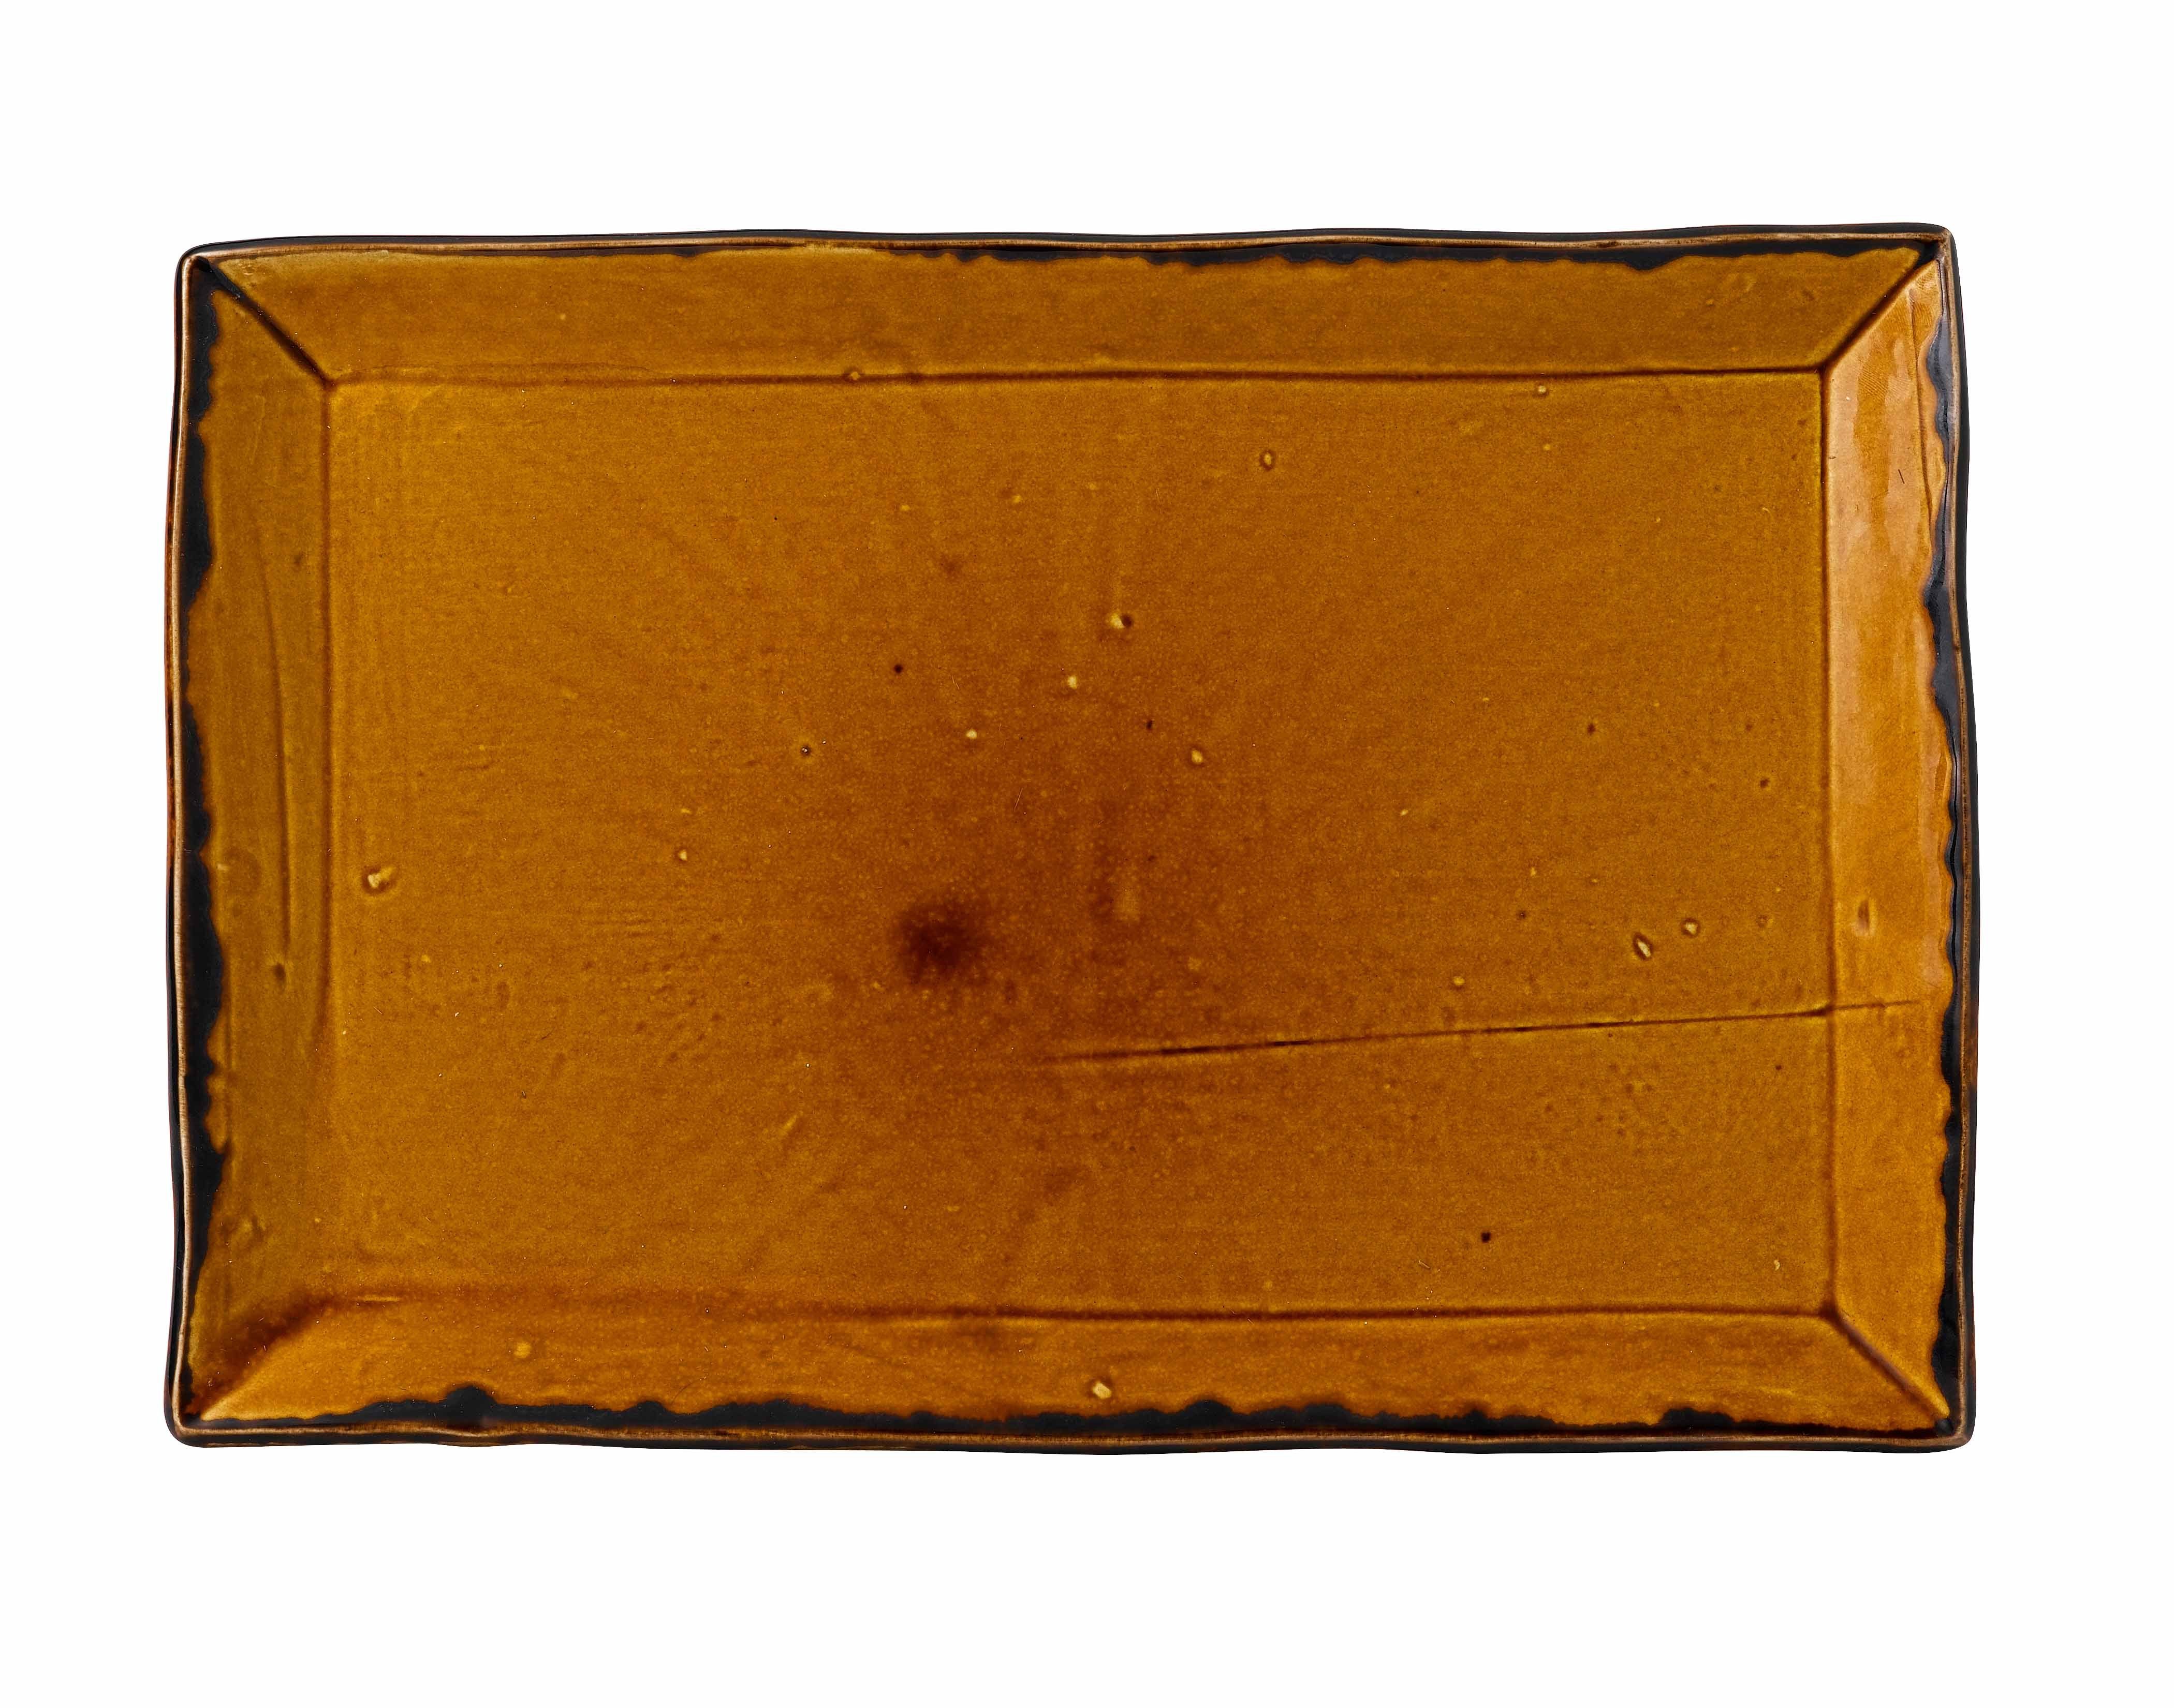 34.5x23.3cm Rechteckig Harvest Dudson Brown Braun Servierbrett Tablett Stück, Feinstes Porzellan 6 Dudson